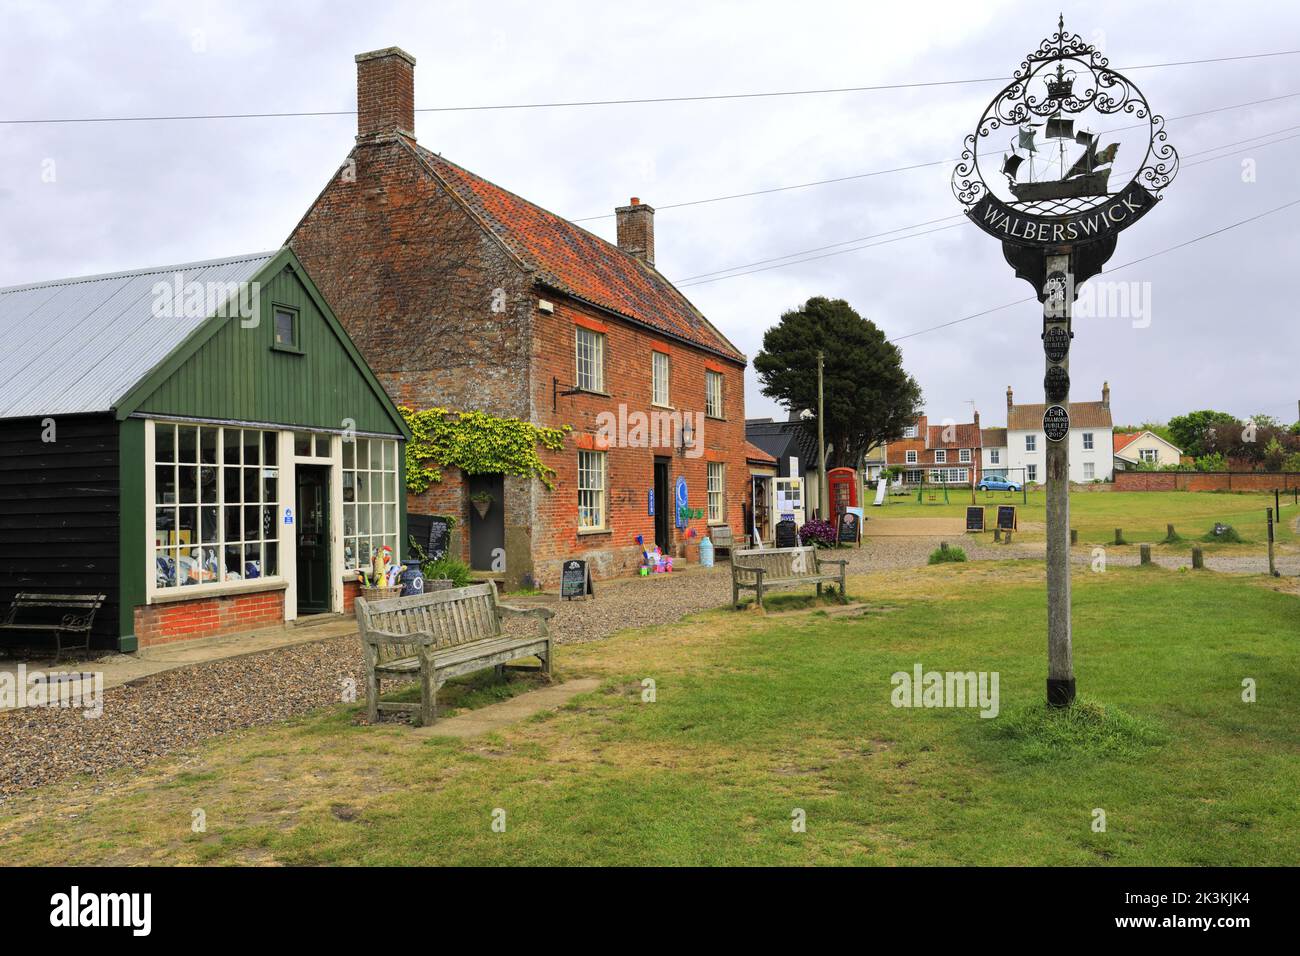 The village green at Walberswick village, Suffolk County, England, UK Stock Photo